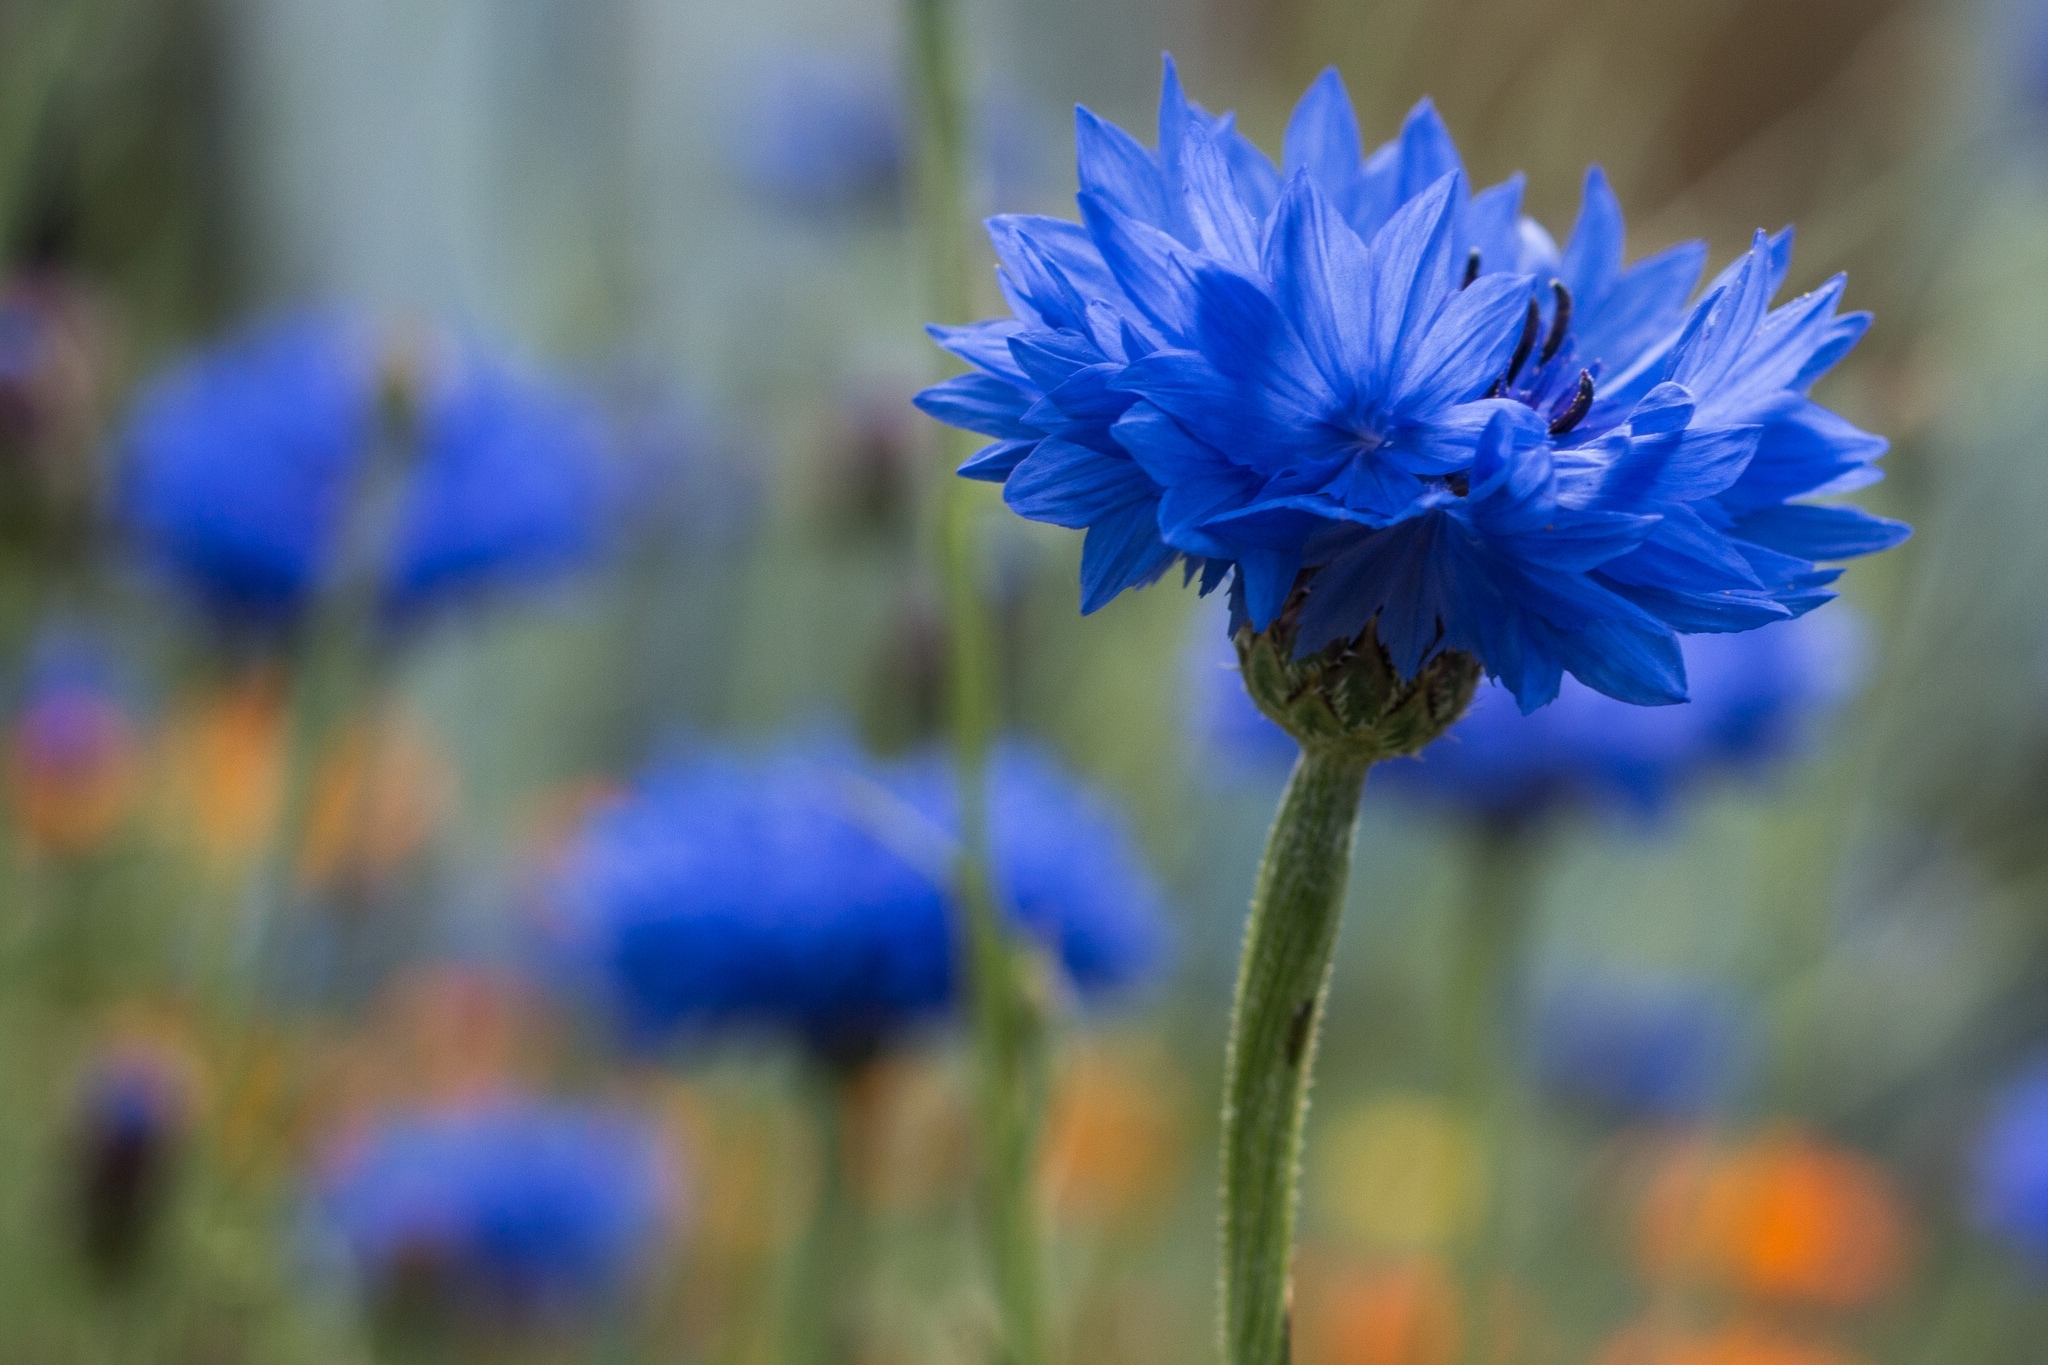 396682 descargar imagen tierra/naturaleza, equinácea, flor azul, difuminado, de cerca, flor, flores: fondos de pantalla y protectores de pantalla gratis